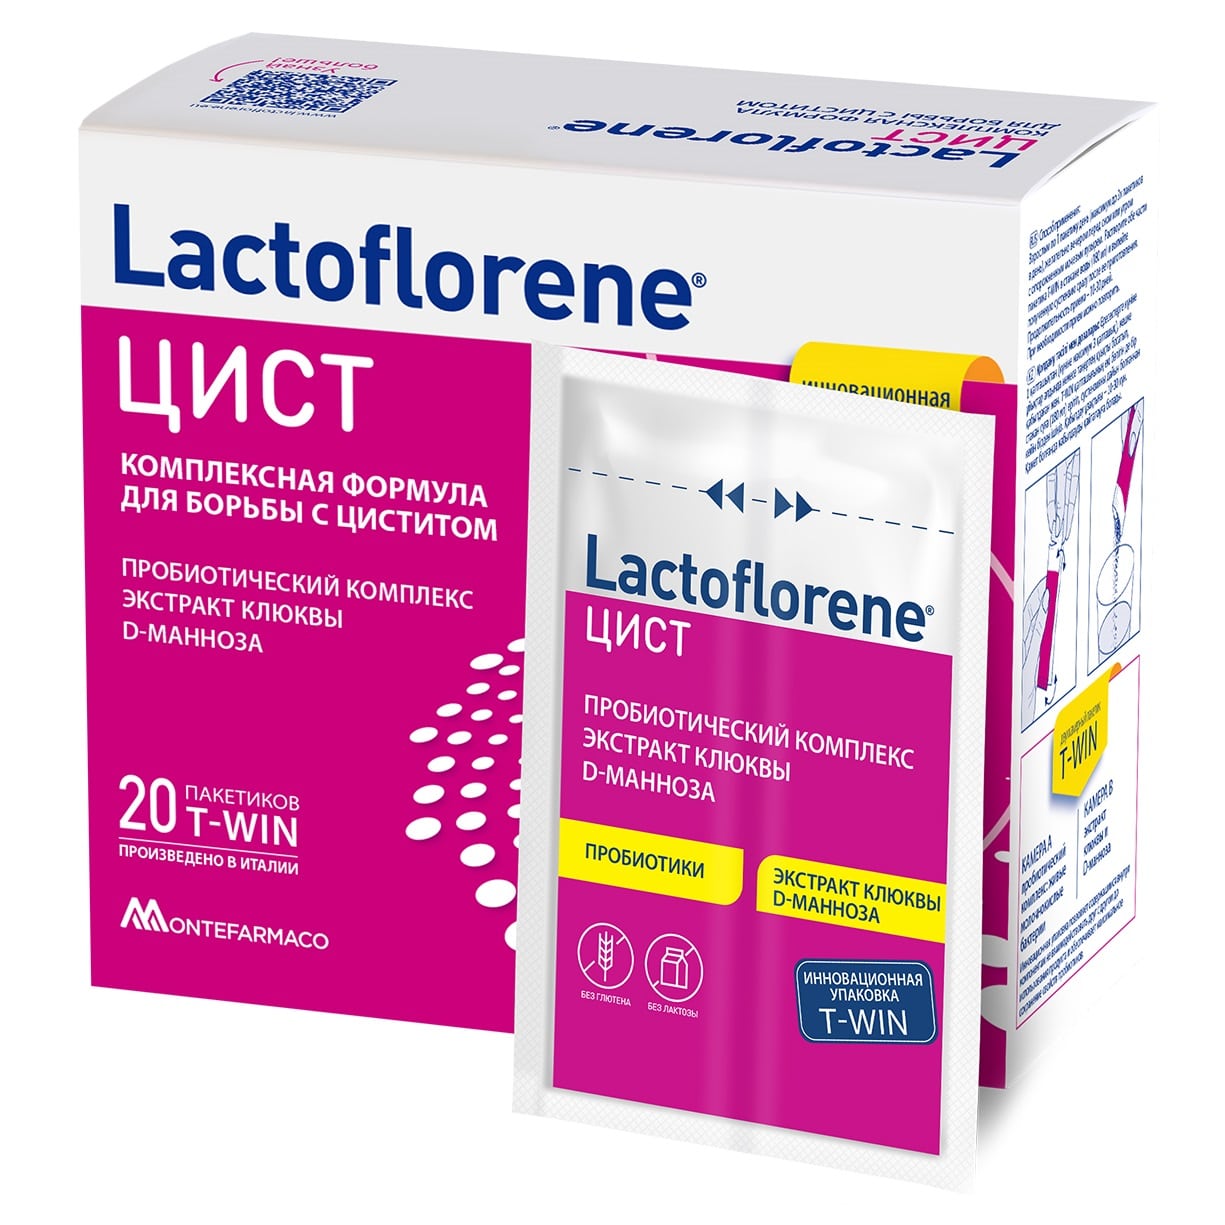 Лактофлорене Пробиотический комплекс Цист, 20 пакетиков (Lactoflorene, ) фото 0